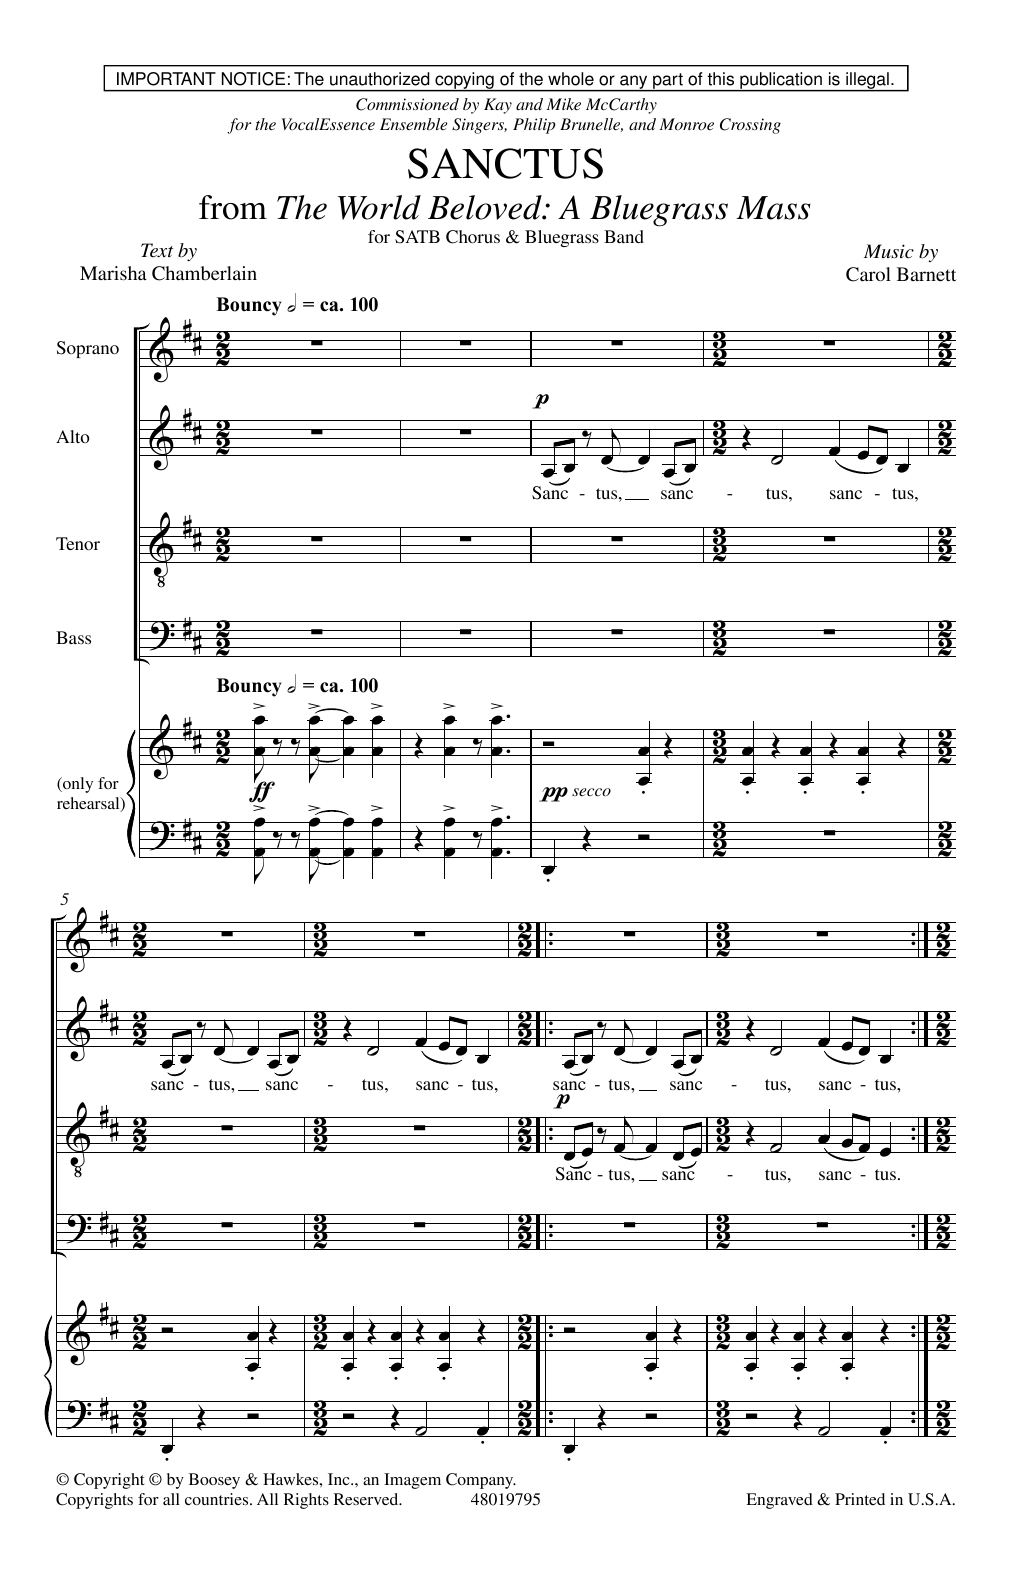 Carol Barnett Sanctus (from The World Beloved: A Bluegrass Mass) Sheet Music Notes & Chords for SATB Choir - Download or Print PDF